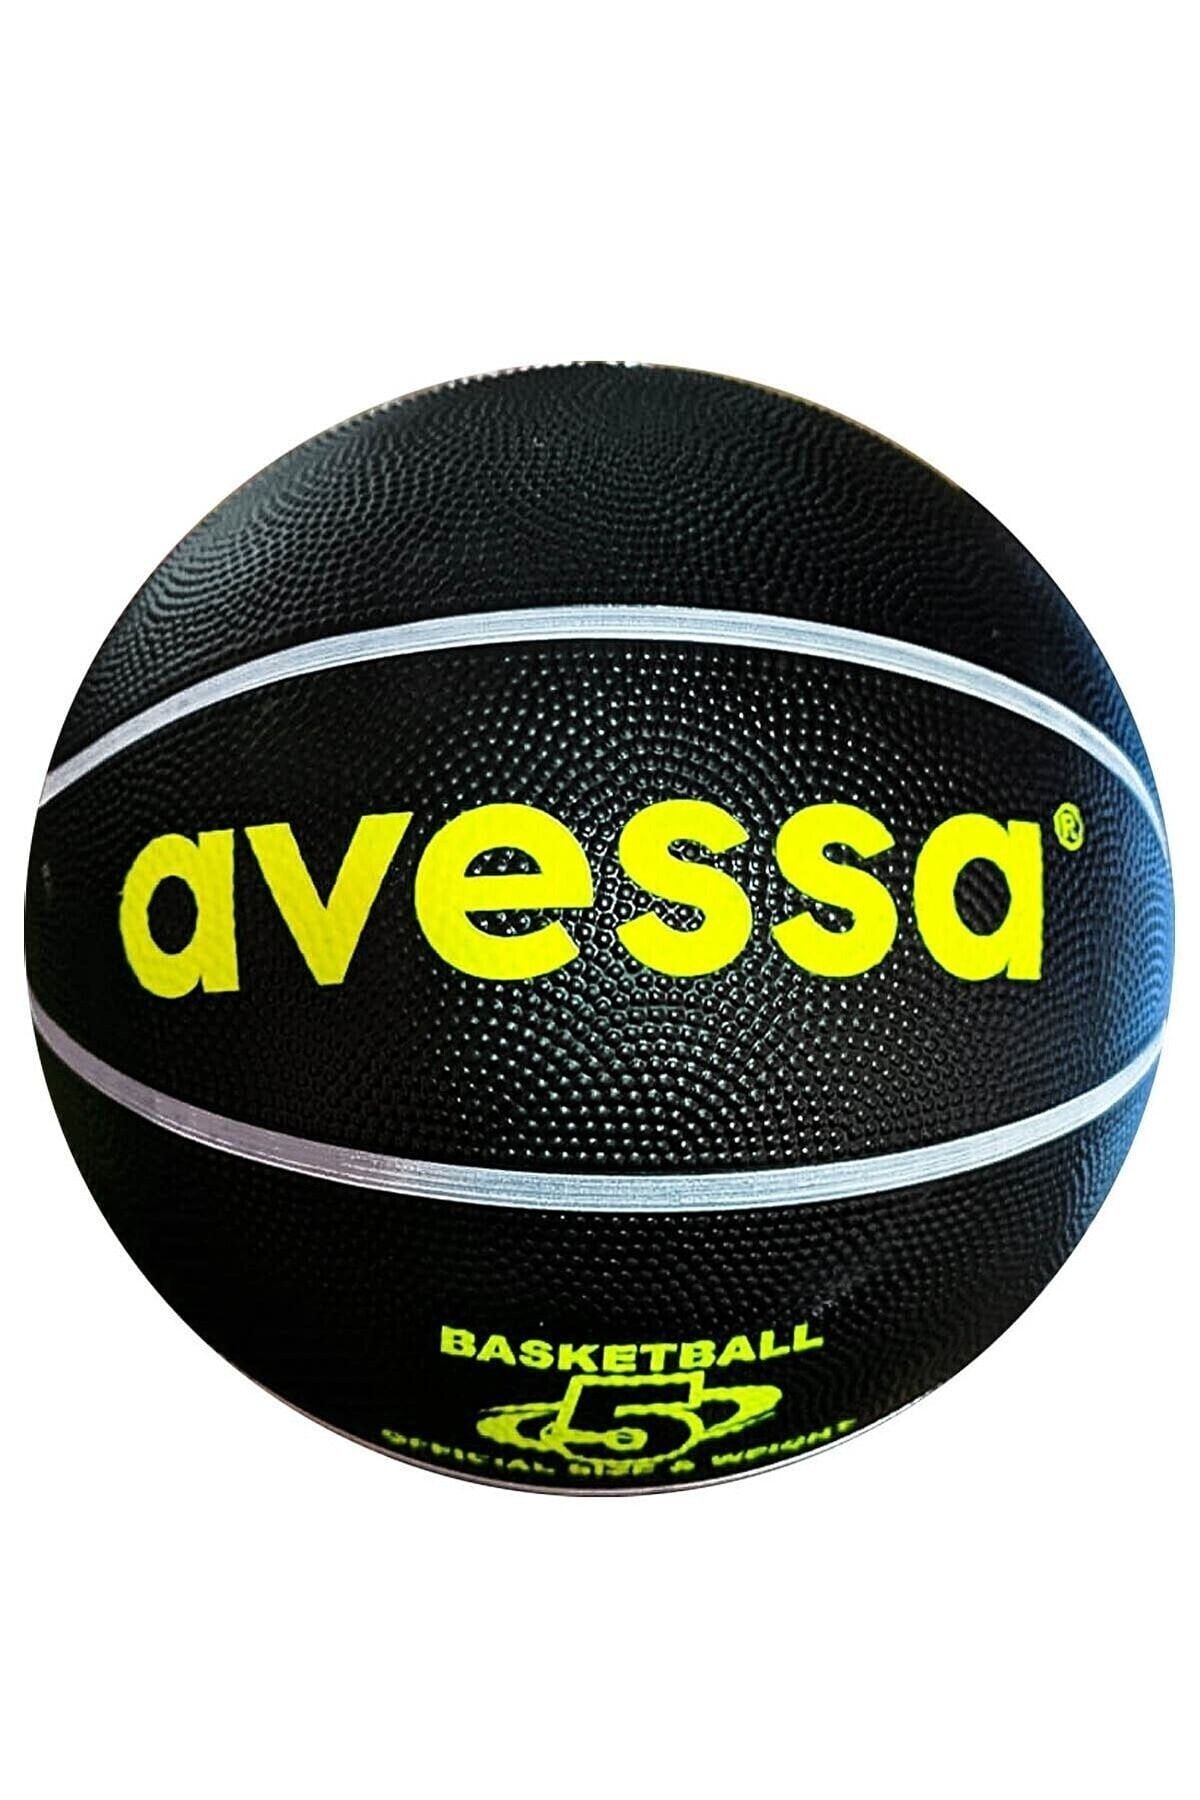 Avessa Basketbol Topu No 5 Siyah